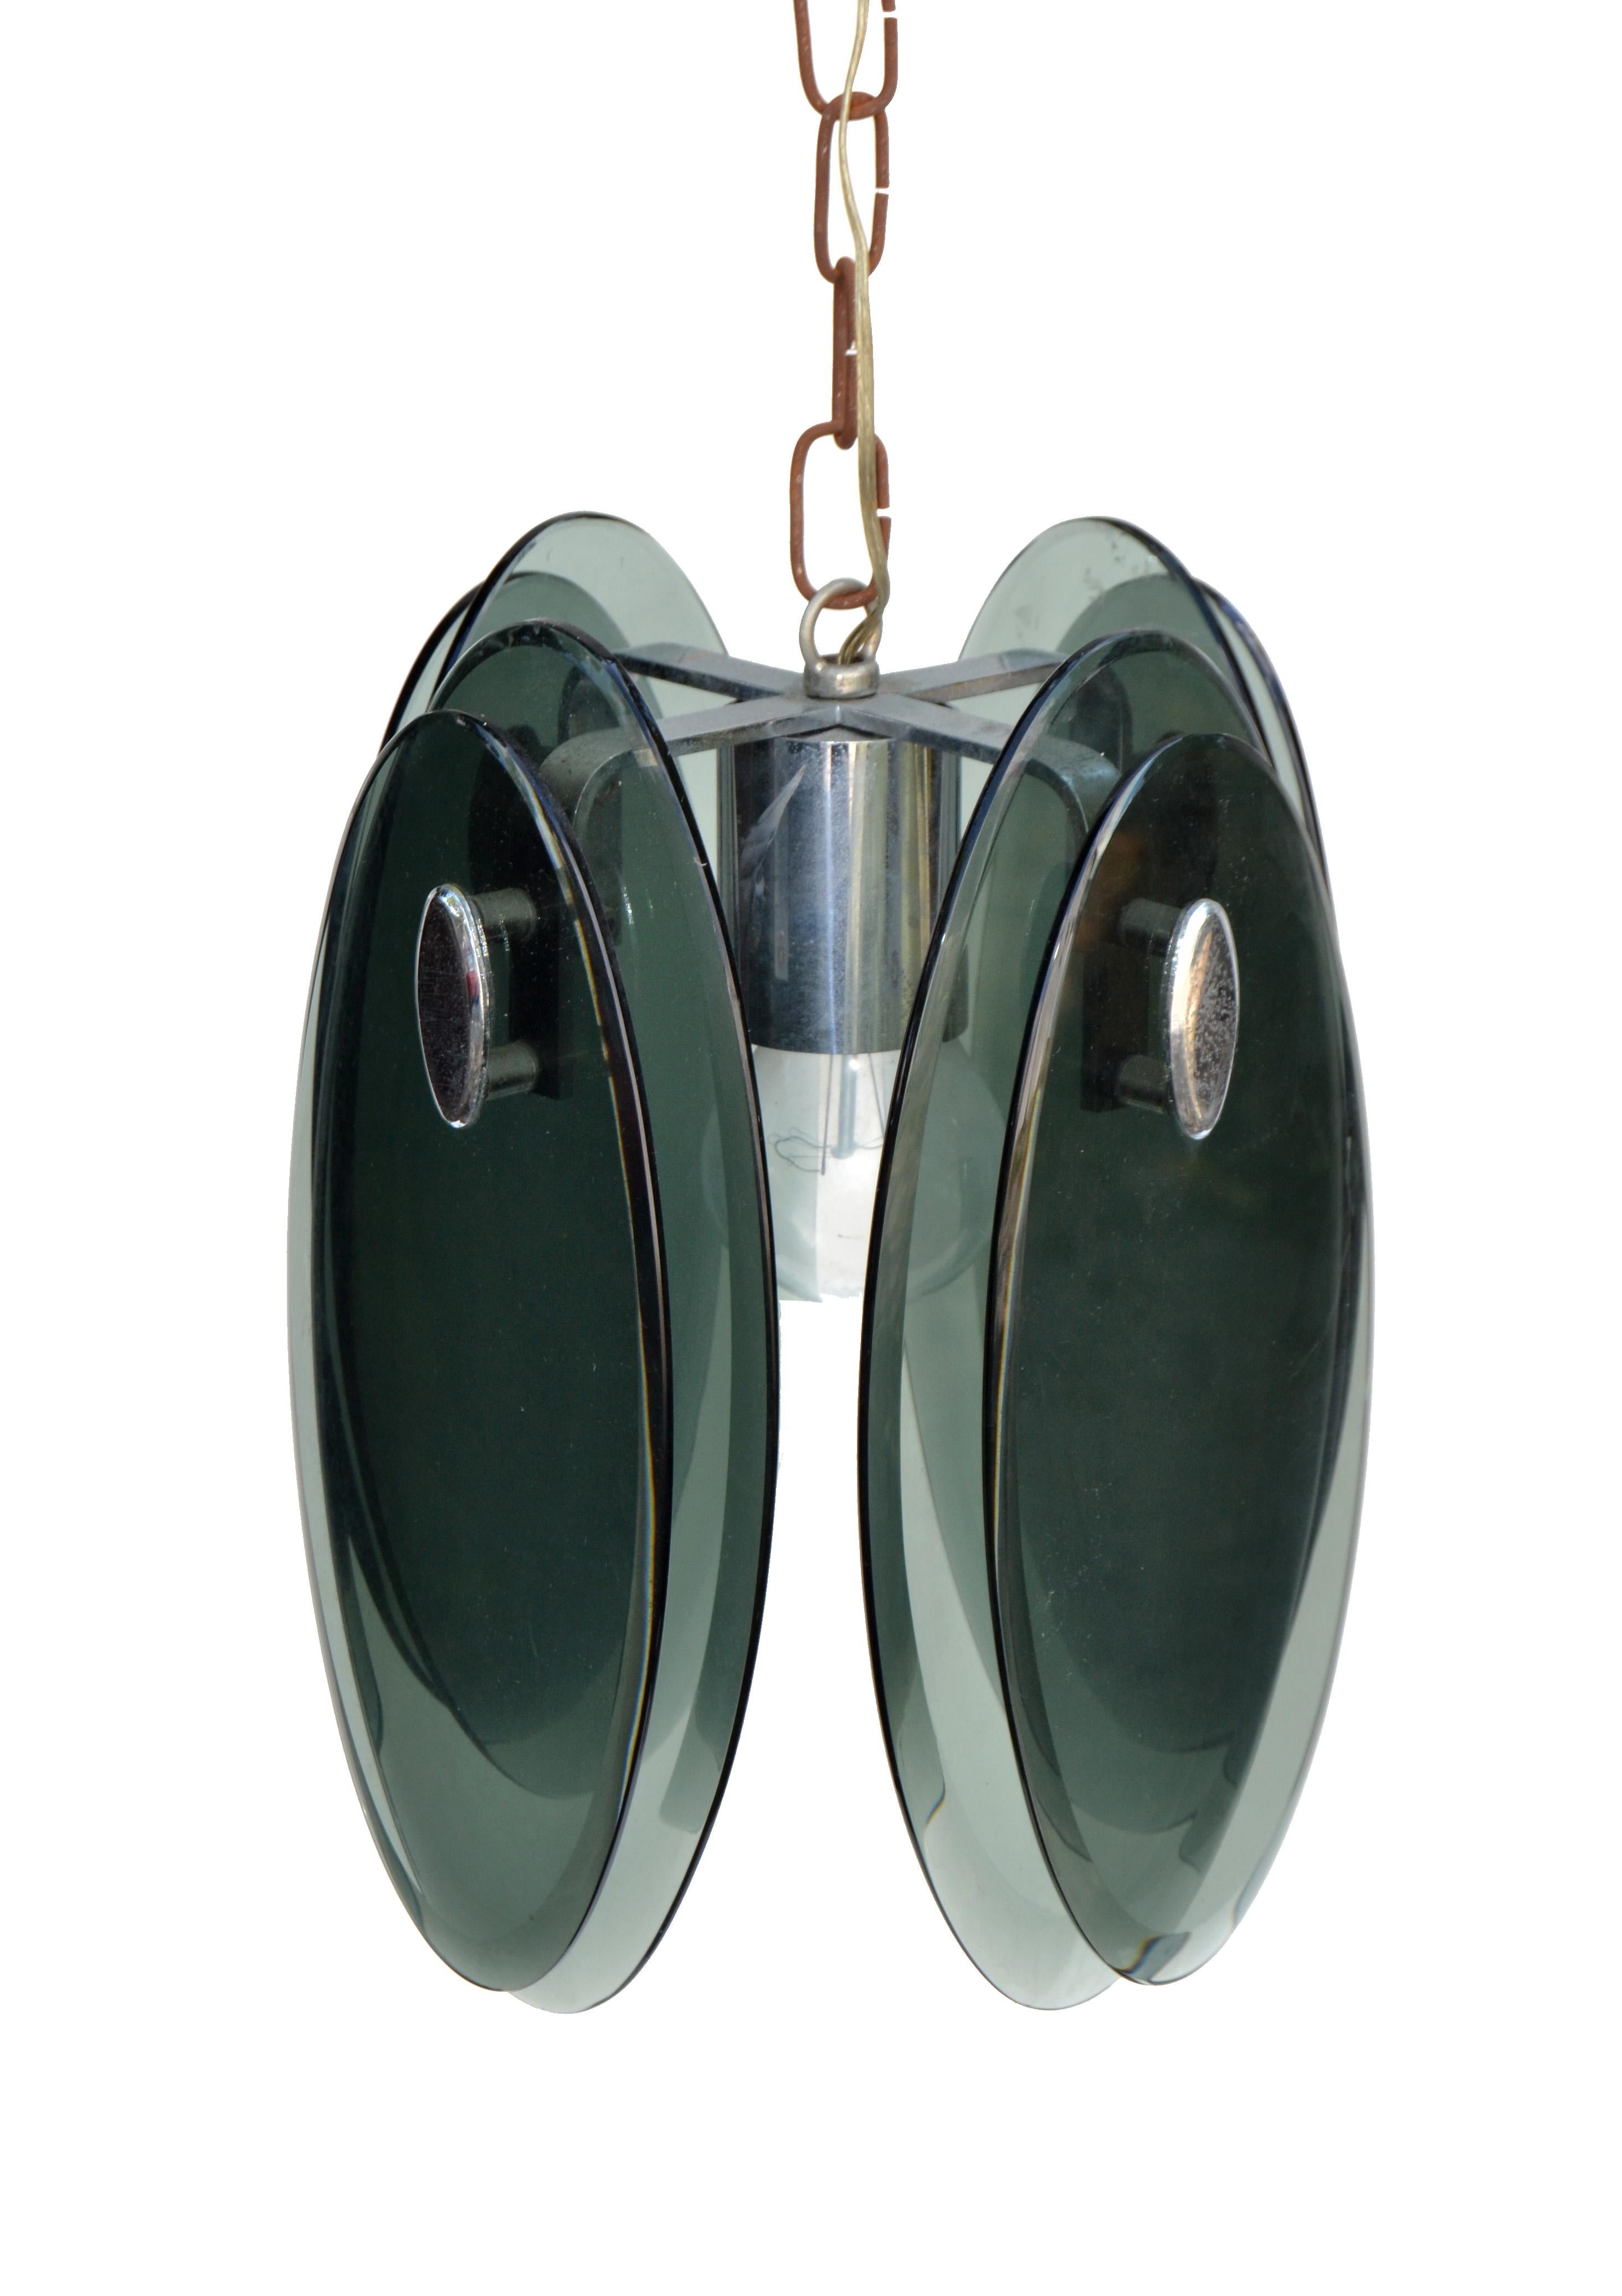 Beveled Fontana Arte Style Mid-Century Modern Glass & Chrome Pendant Light Fixture 1960s For Sale